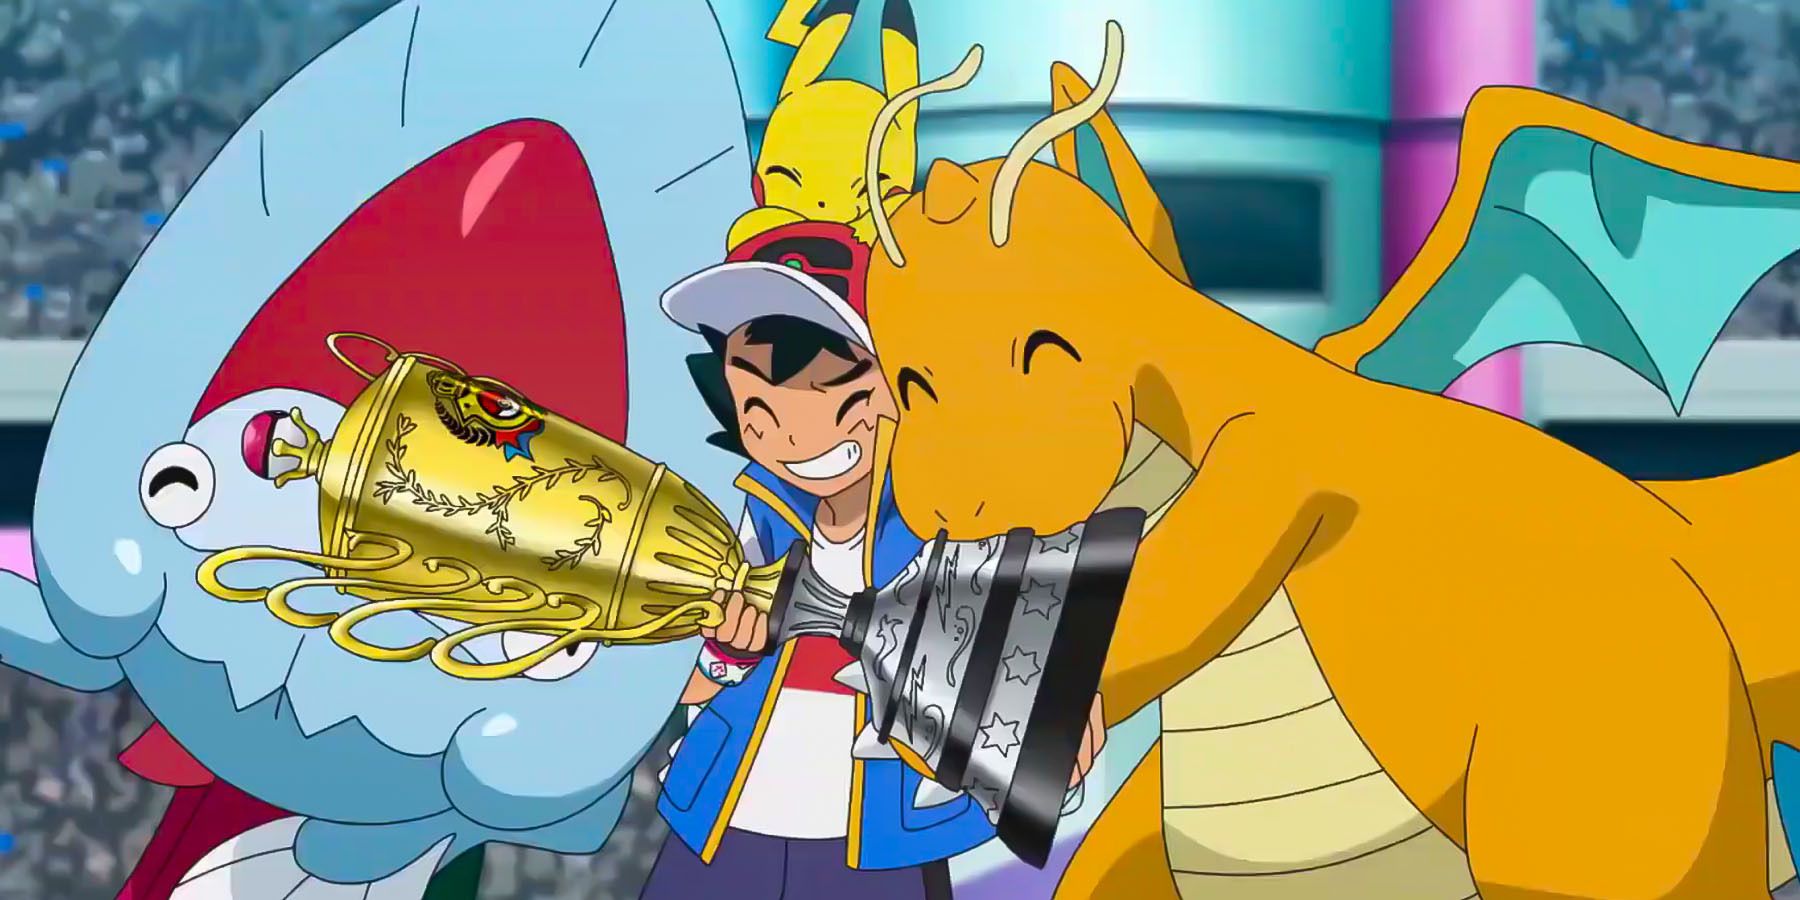 Ash Ketchum Finally Becomes Pokémon World Champion in the Anime